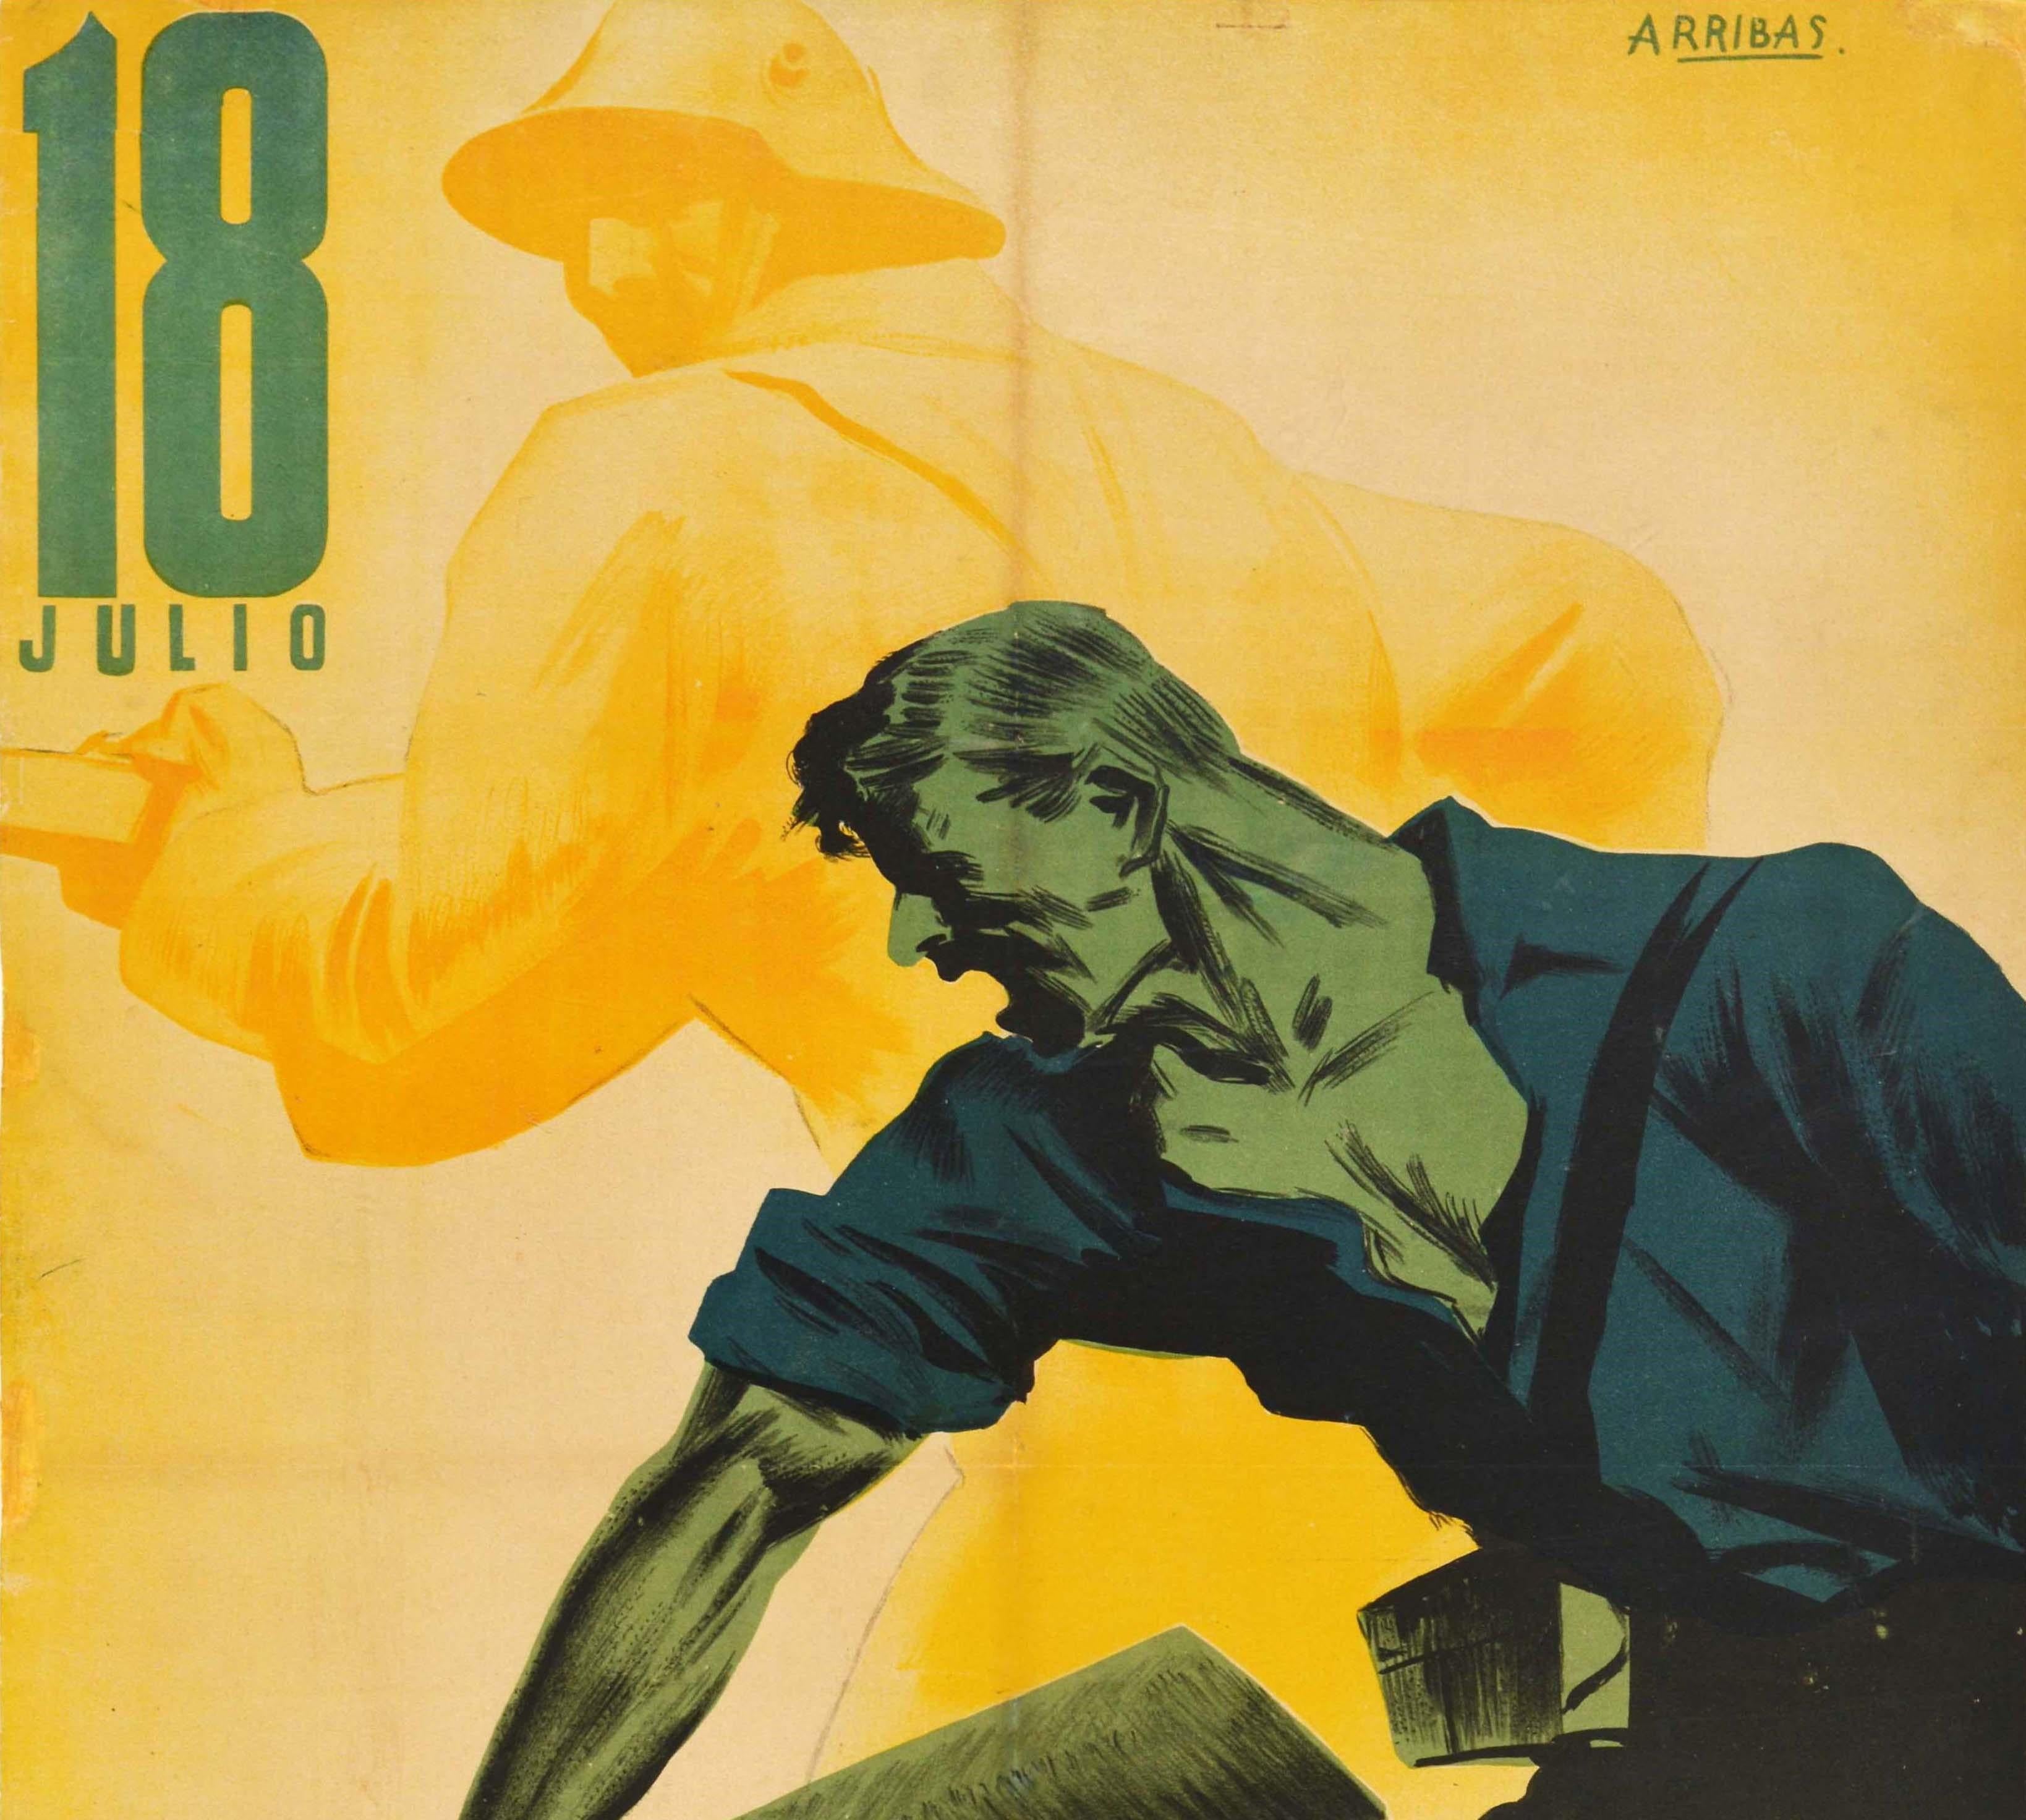 Original vintage Spanish Civil War propaganda poster - 18 Julio 1936 1937 - commemorating the anniversary of the Spanish coup of 1936 / Golpe de Estado de Espana de julio de 1936 and the start of the Spanish Civil War (1936-1939) featuring an image